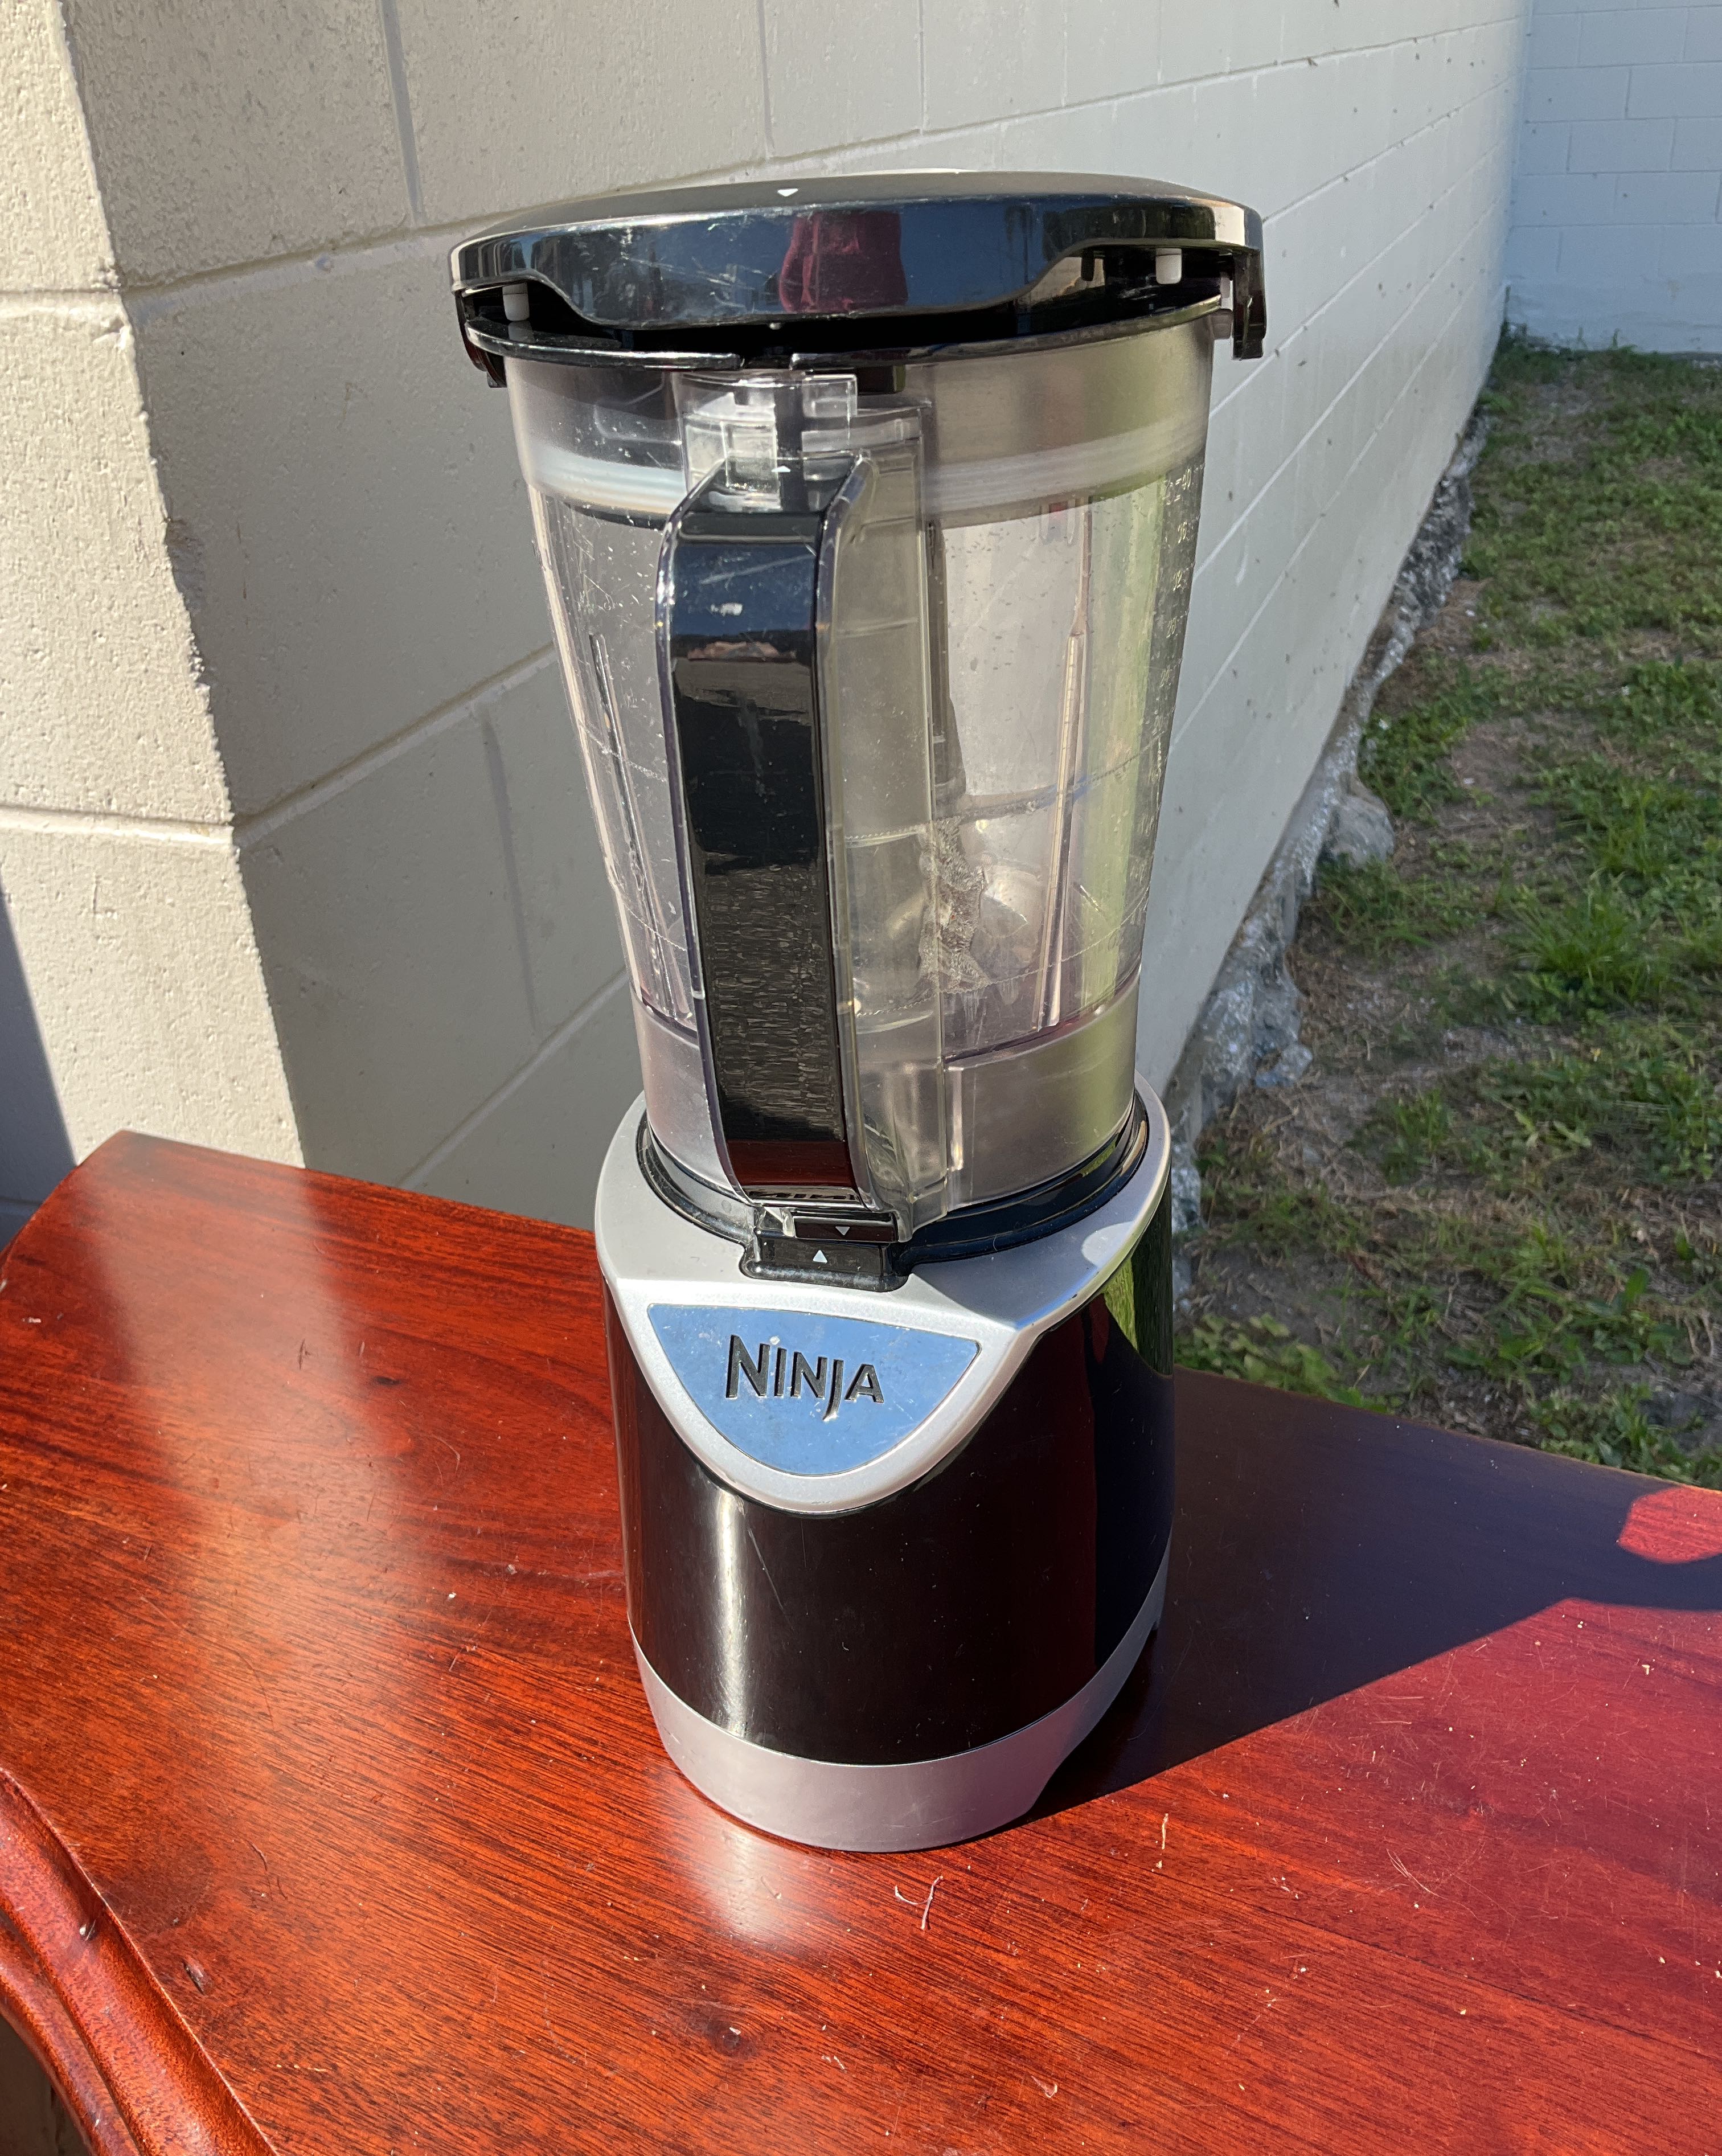 Ninja blender and food processor - Appliances - Tampa, Florida